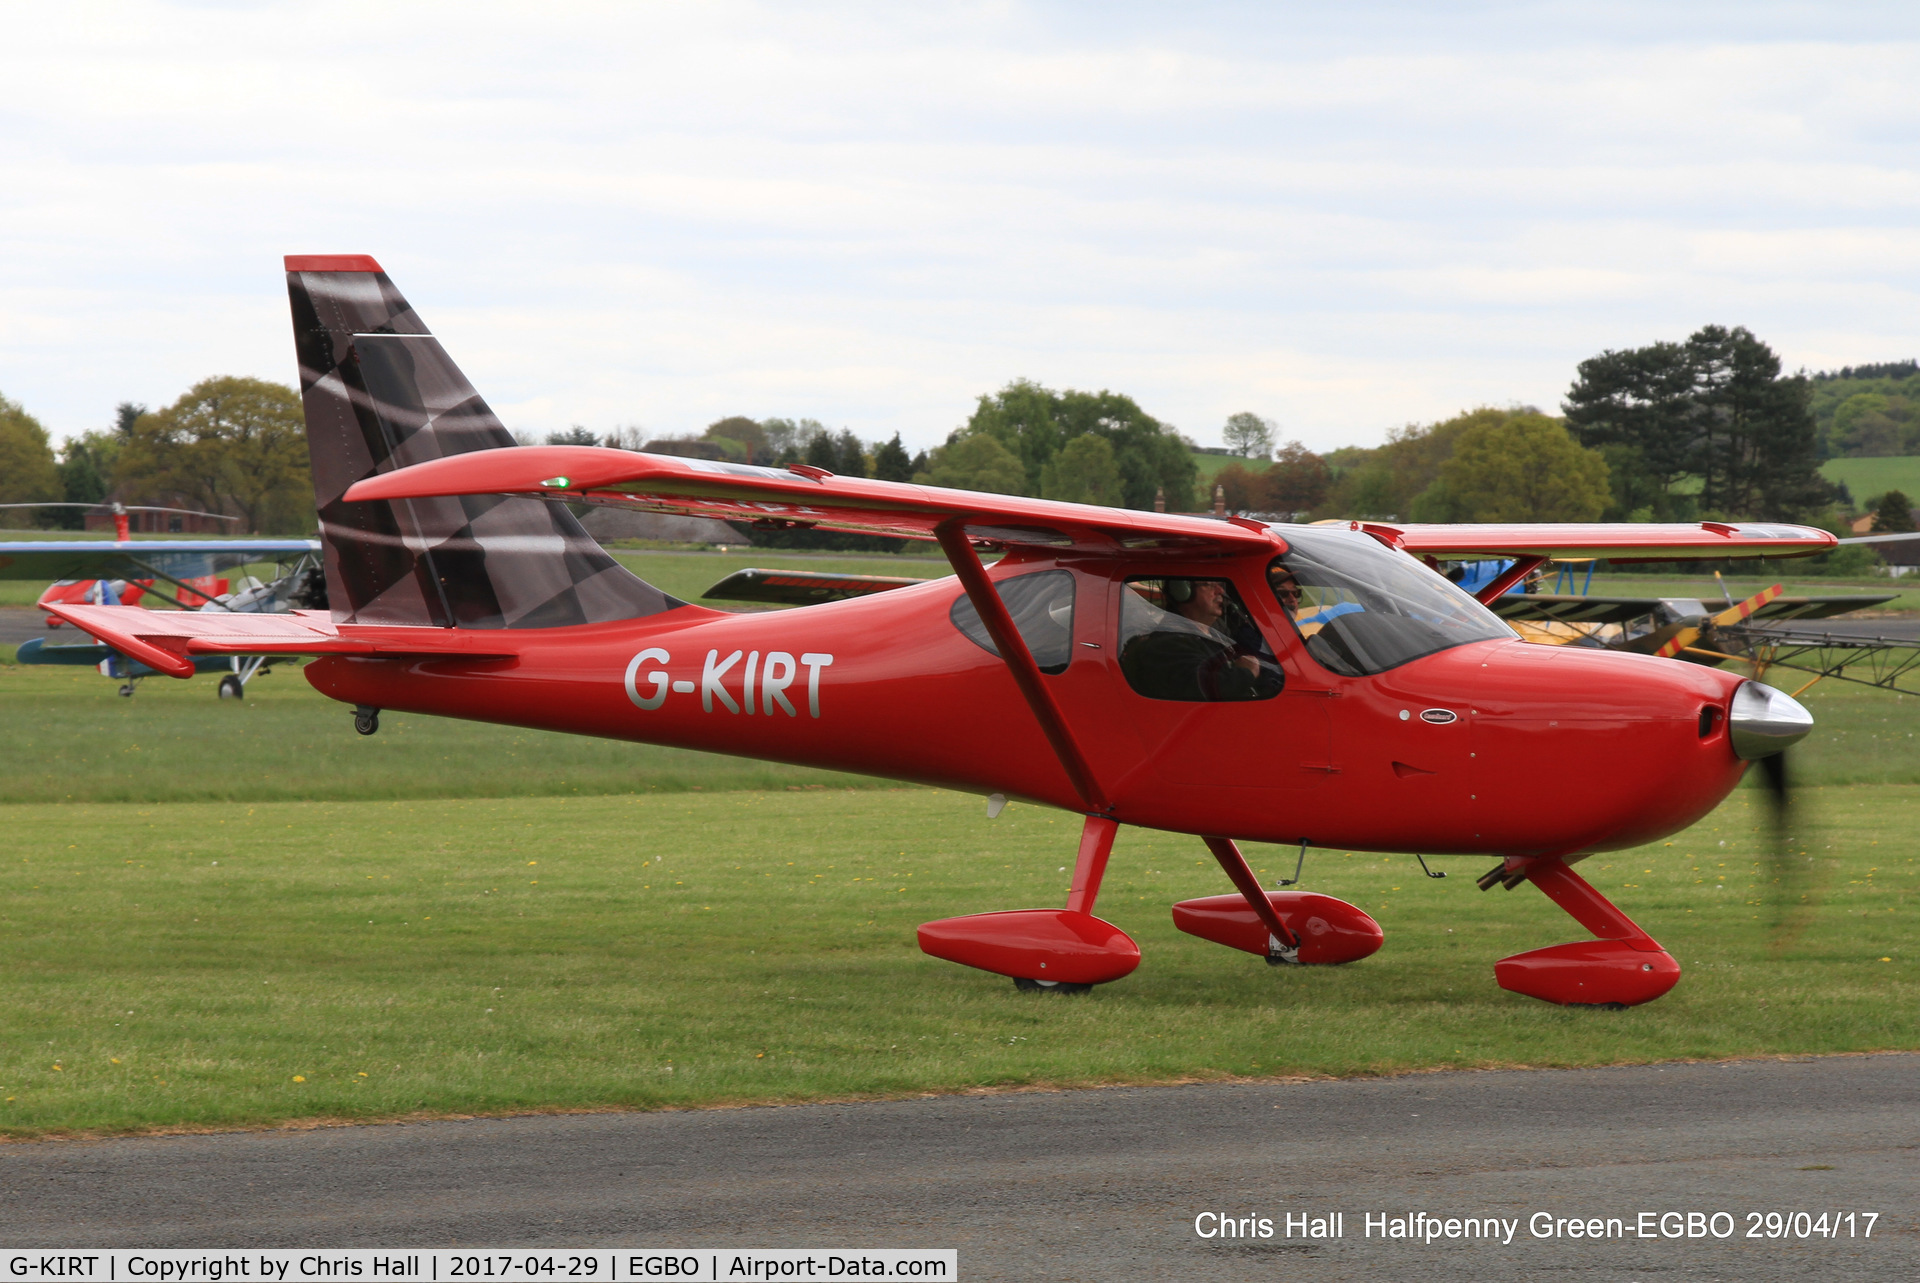 G-KIRT, 2013 Glasair GlaStar C/N LAA 295-15189, at the Radial & Trainer fly-in